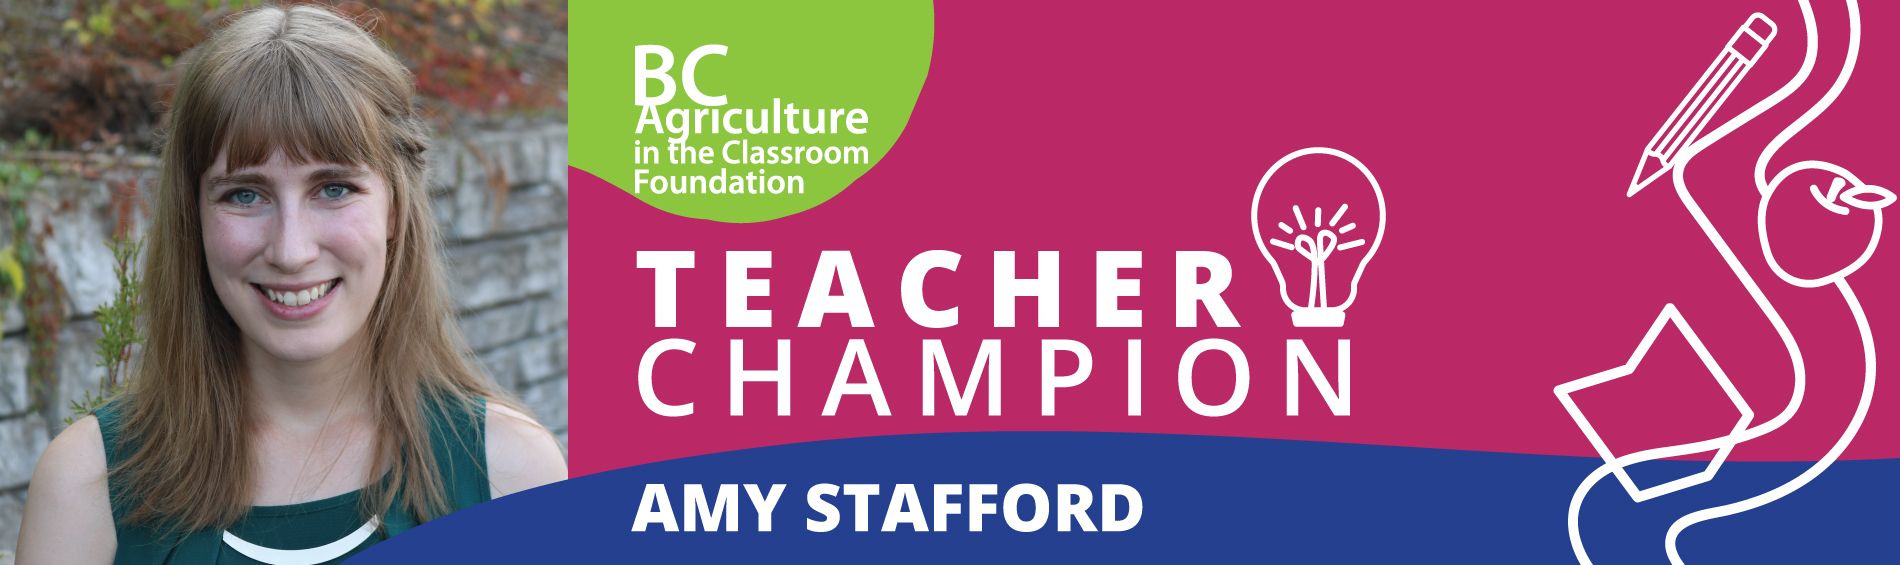 Amy Stafford - Teacher Champion